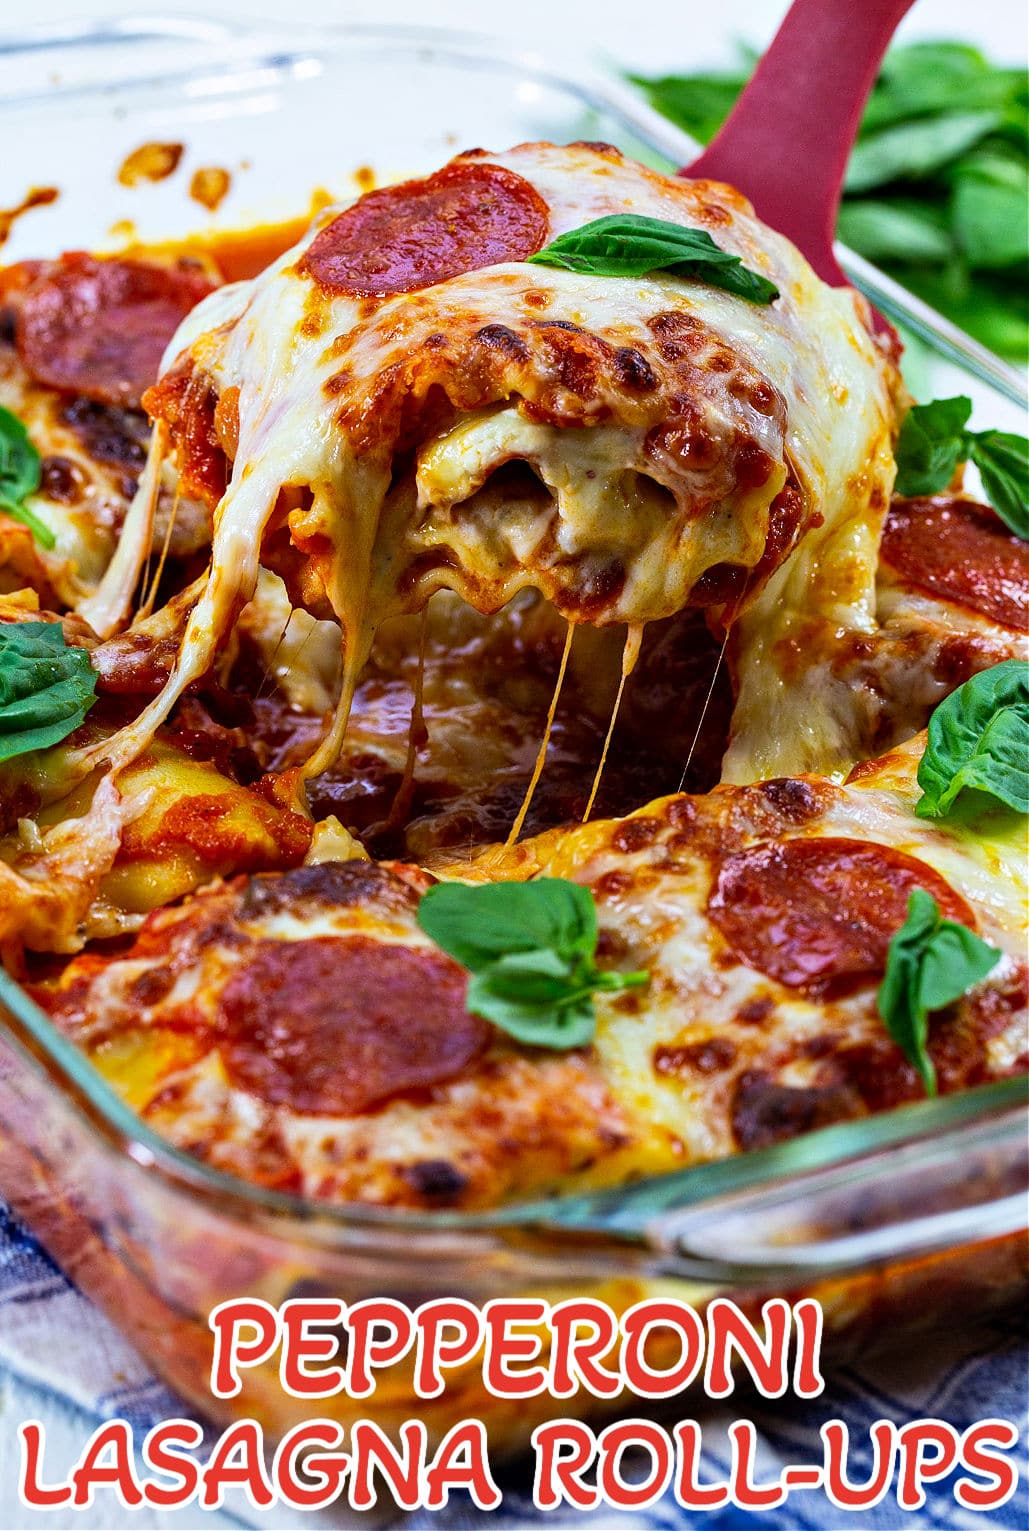 Pepperoni Lasagna Roll-Ups in baking dish.